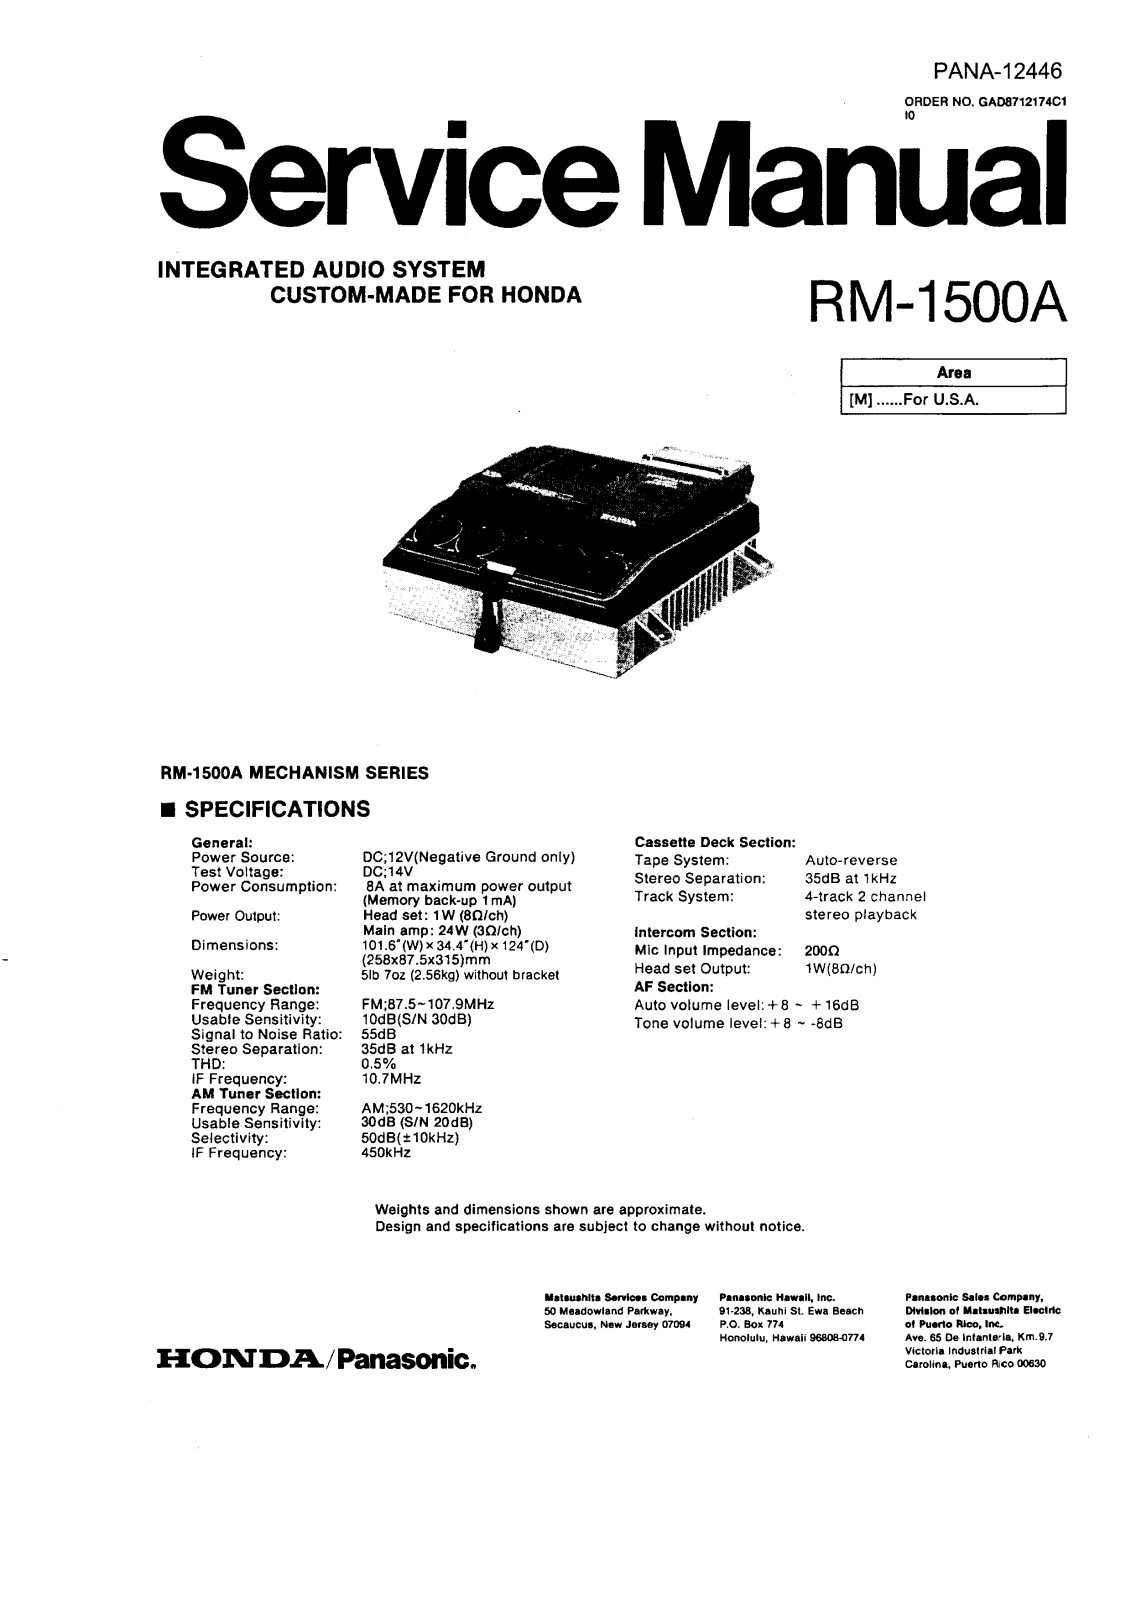 Panasonic RM-1500A Service Manual